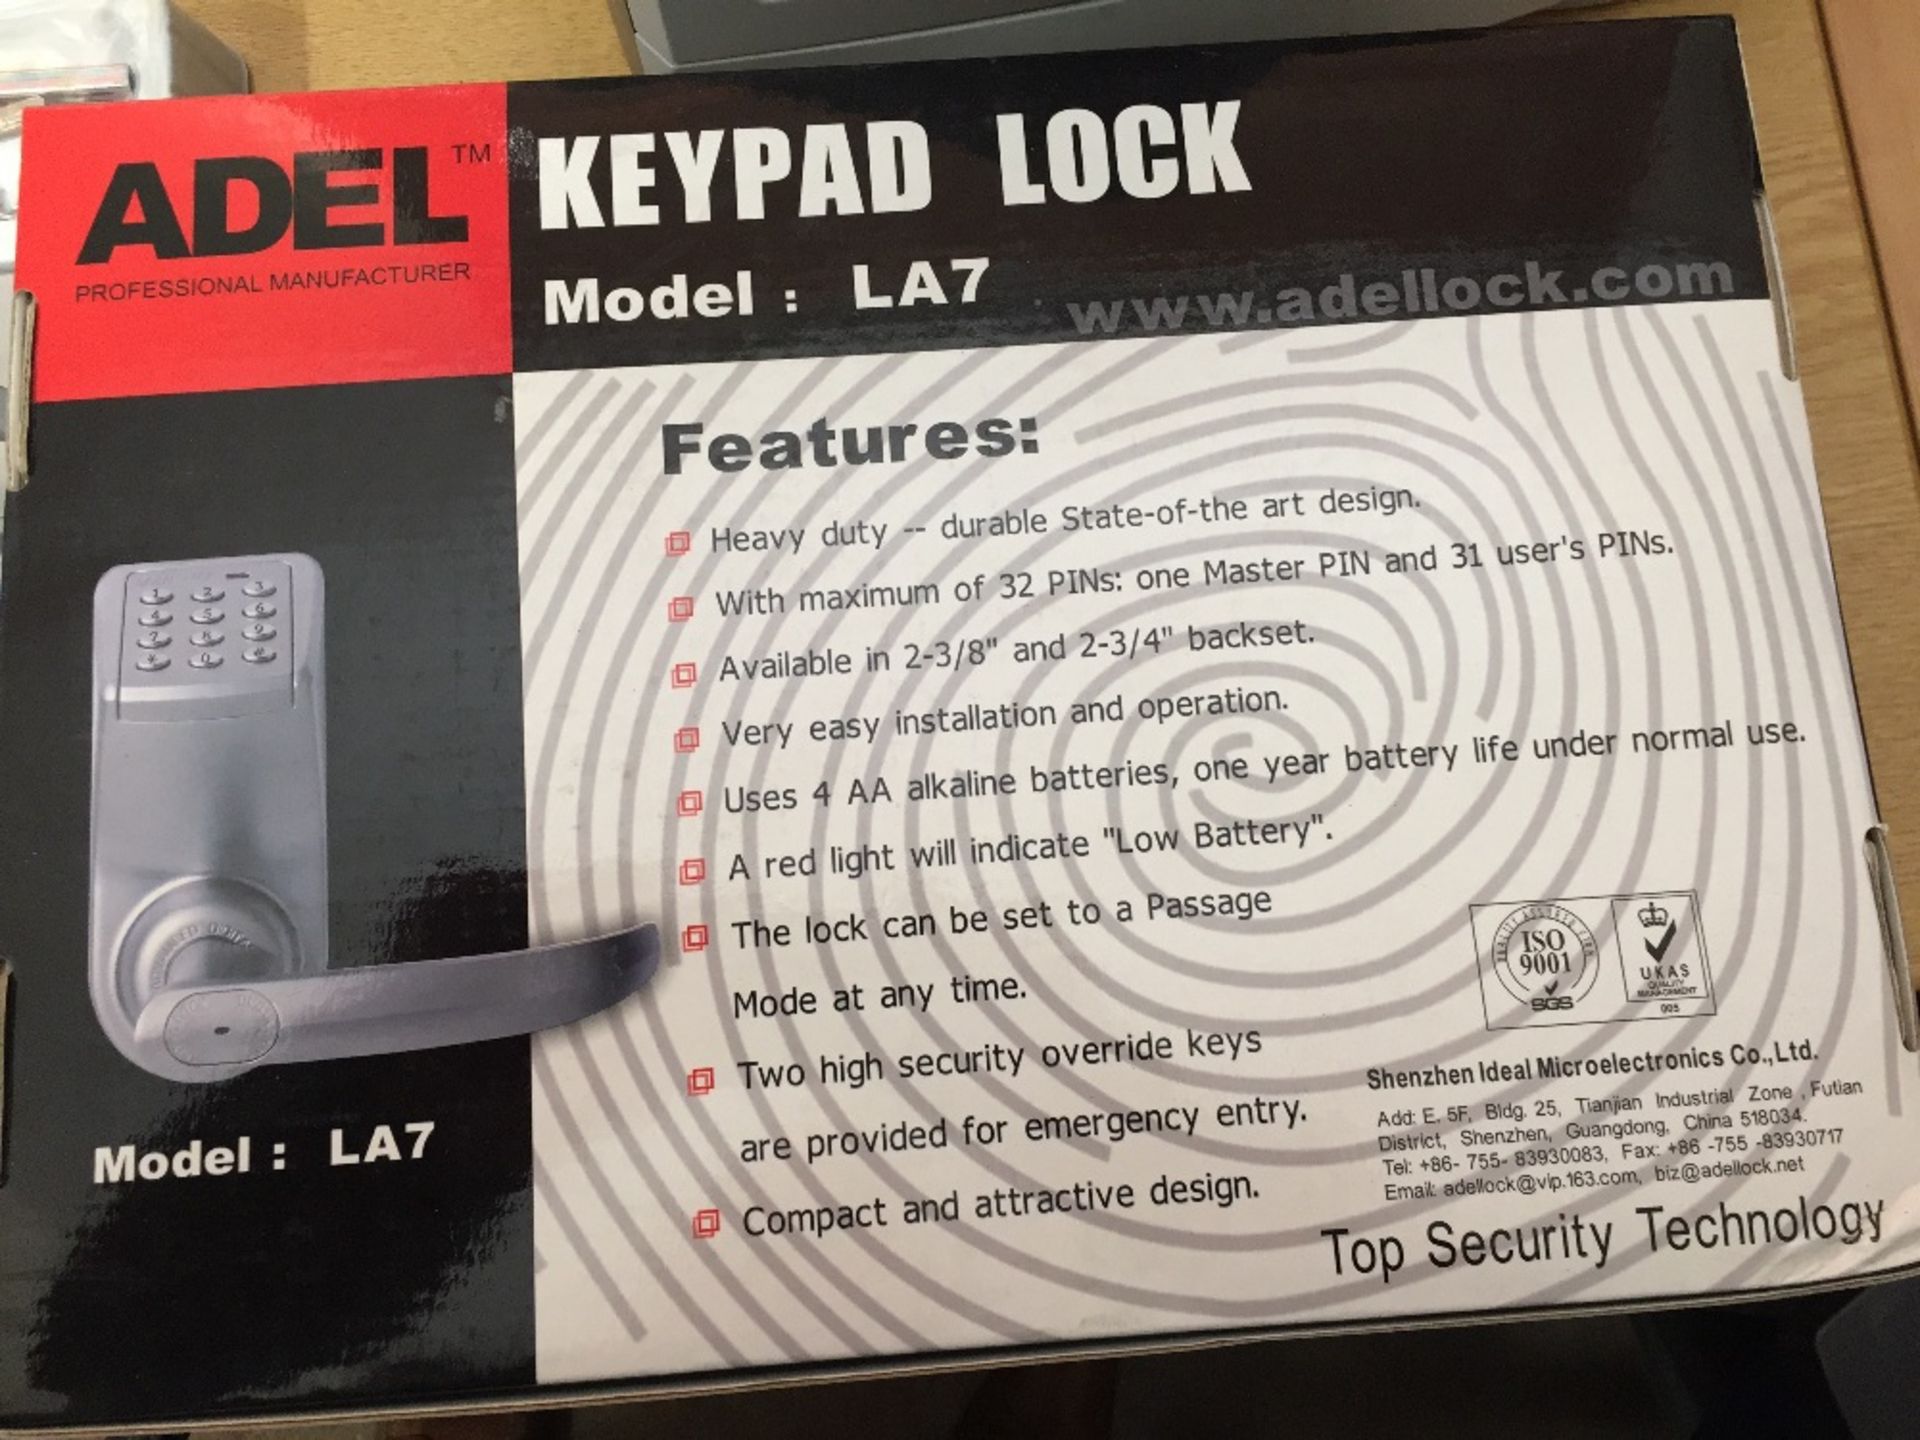 Adel Key pad Lock Model La7 Located in Cheltenham